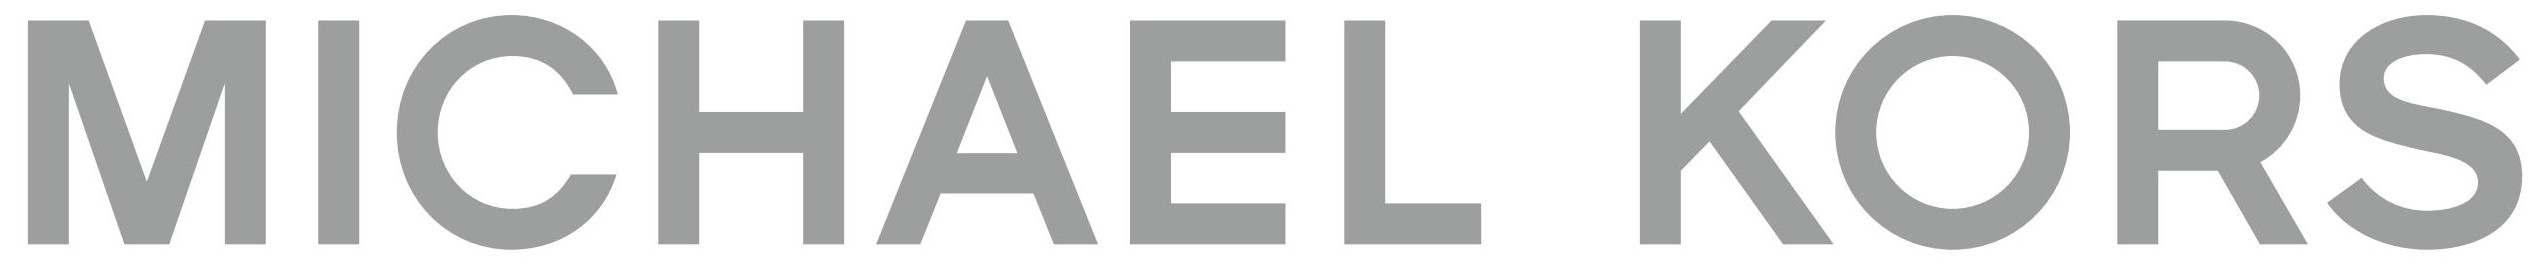 Michael Kors Logo